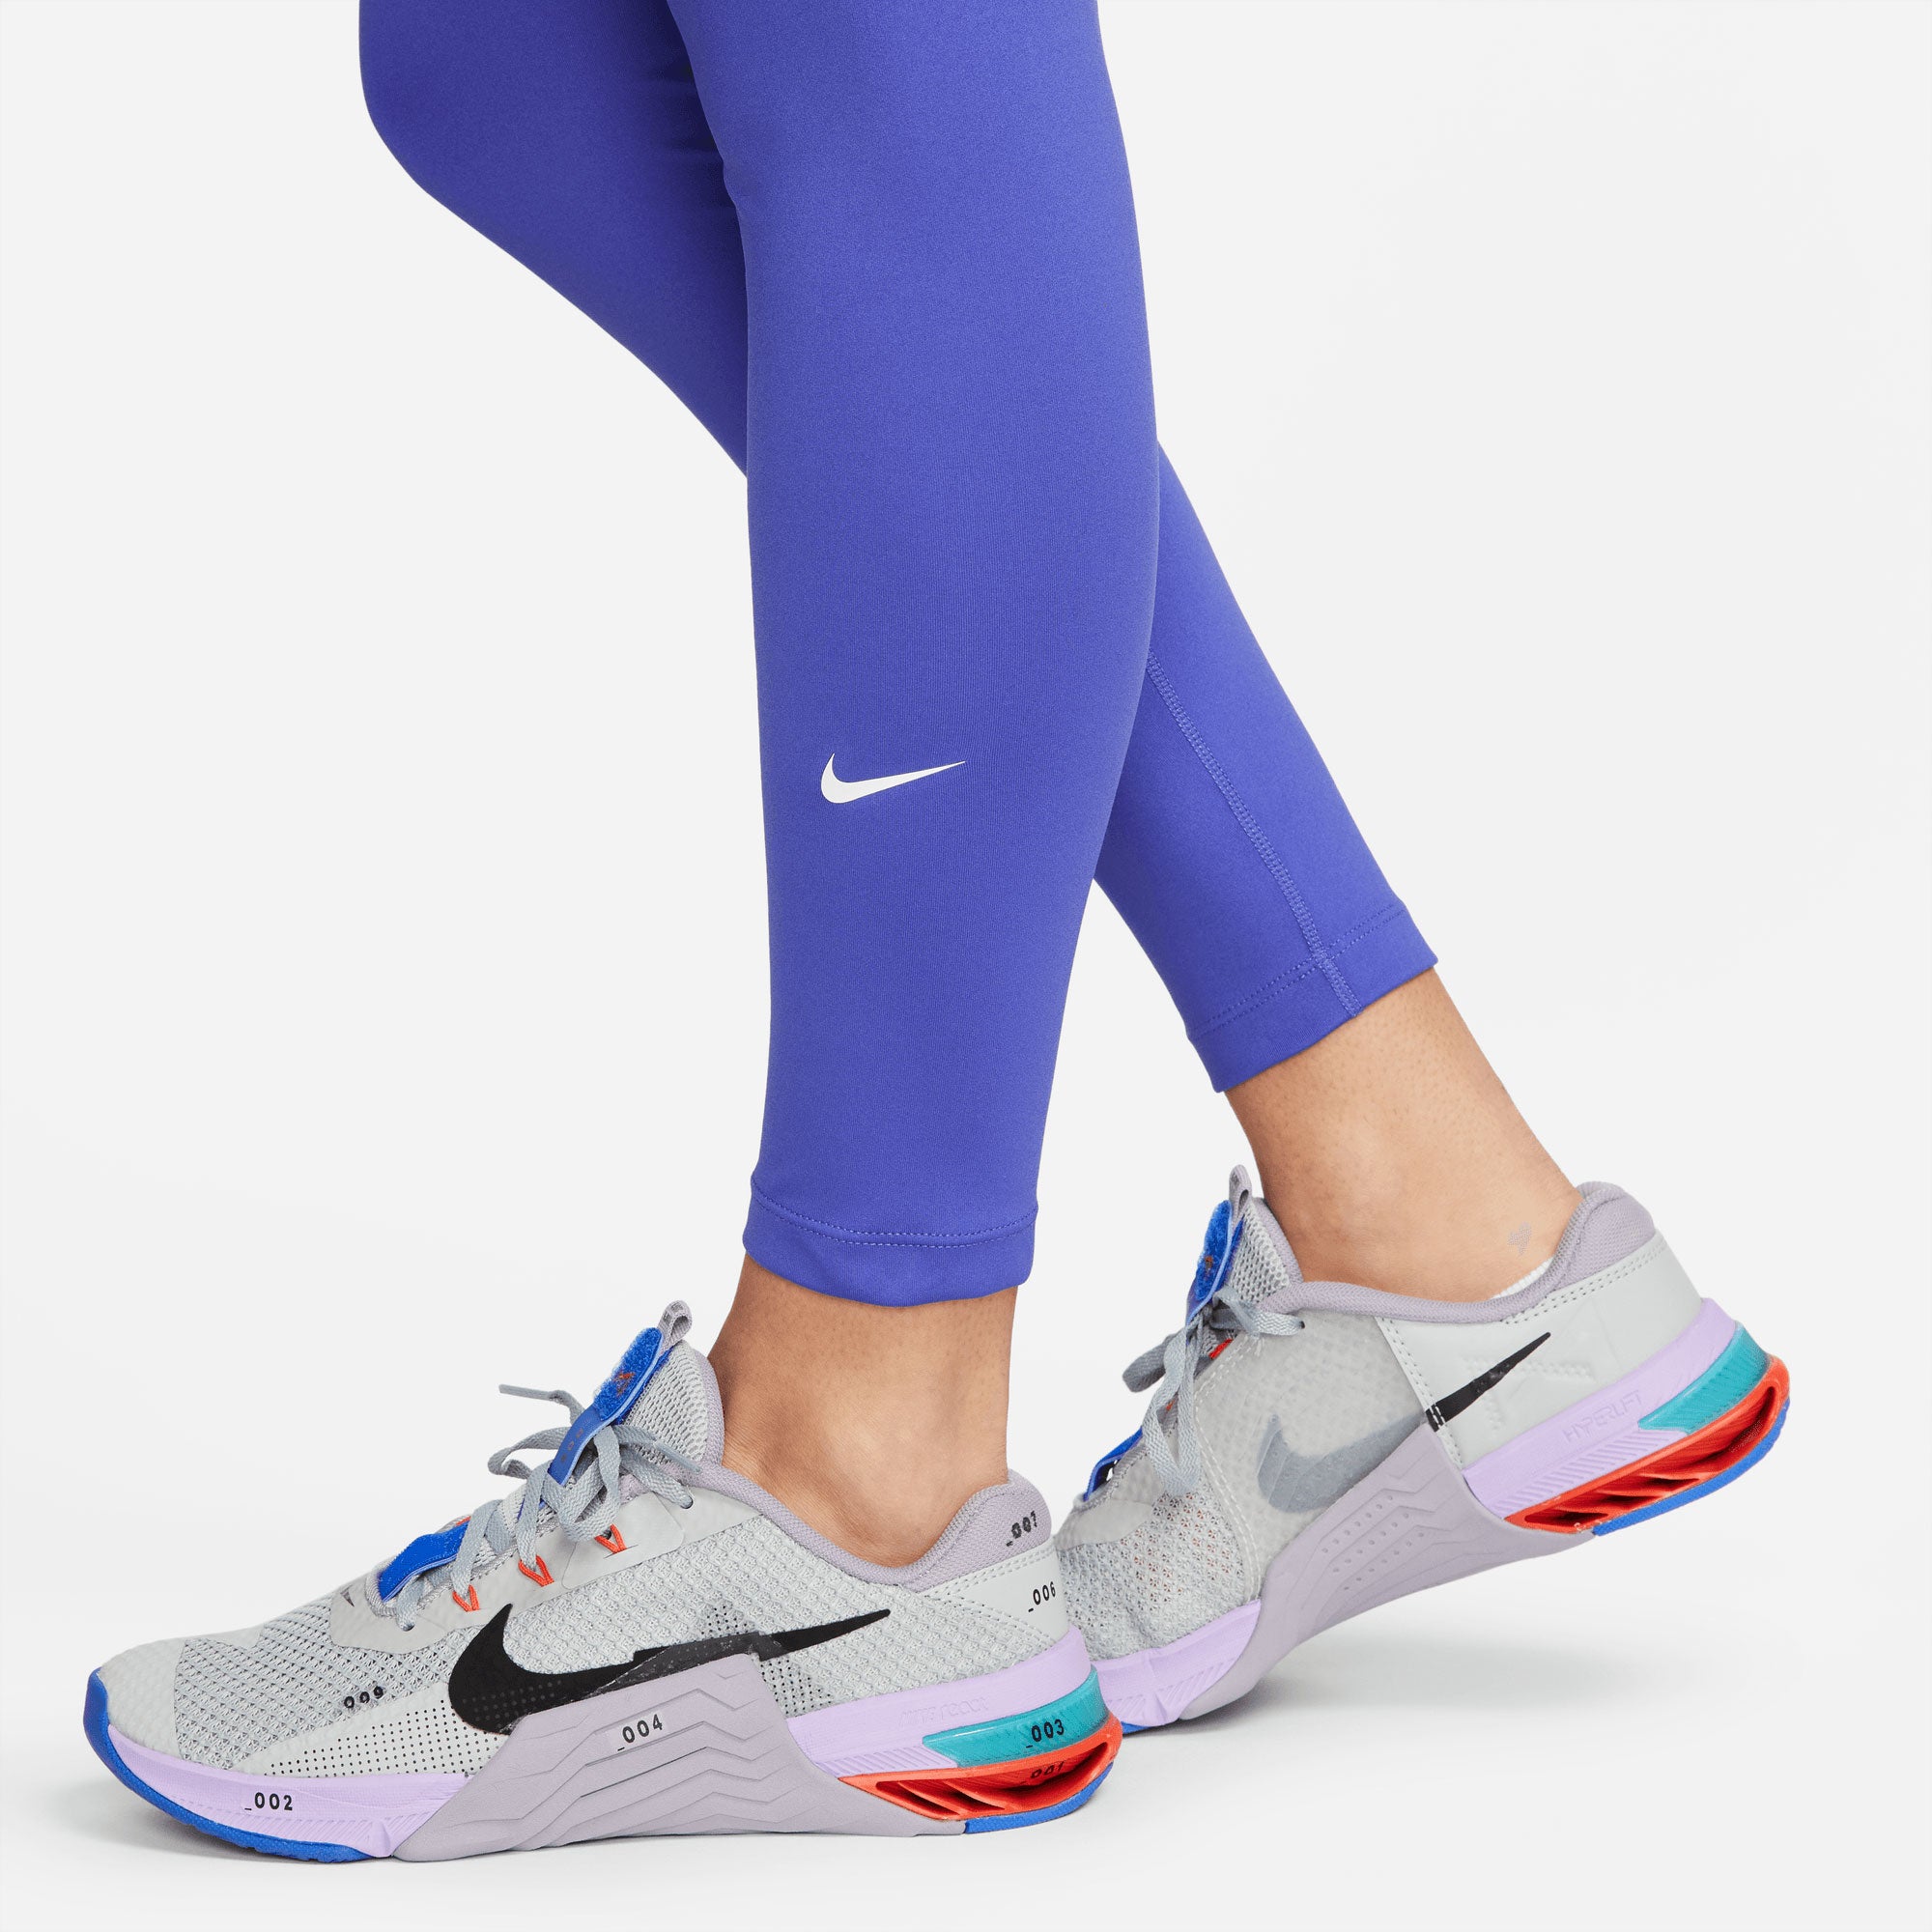 Nike One Dri-FIT Women's Mid-Rise Tights